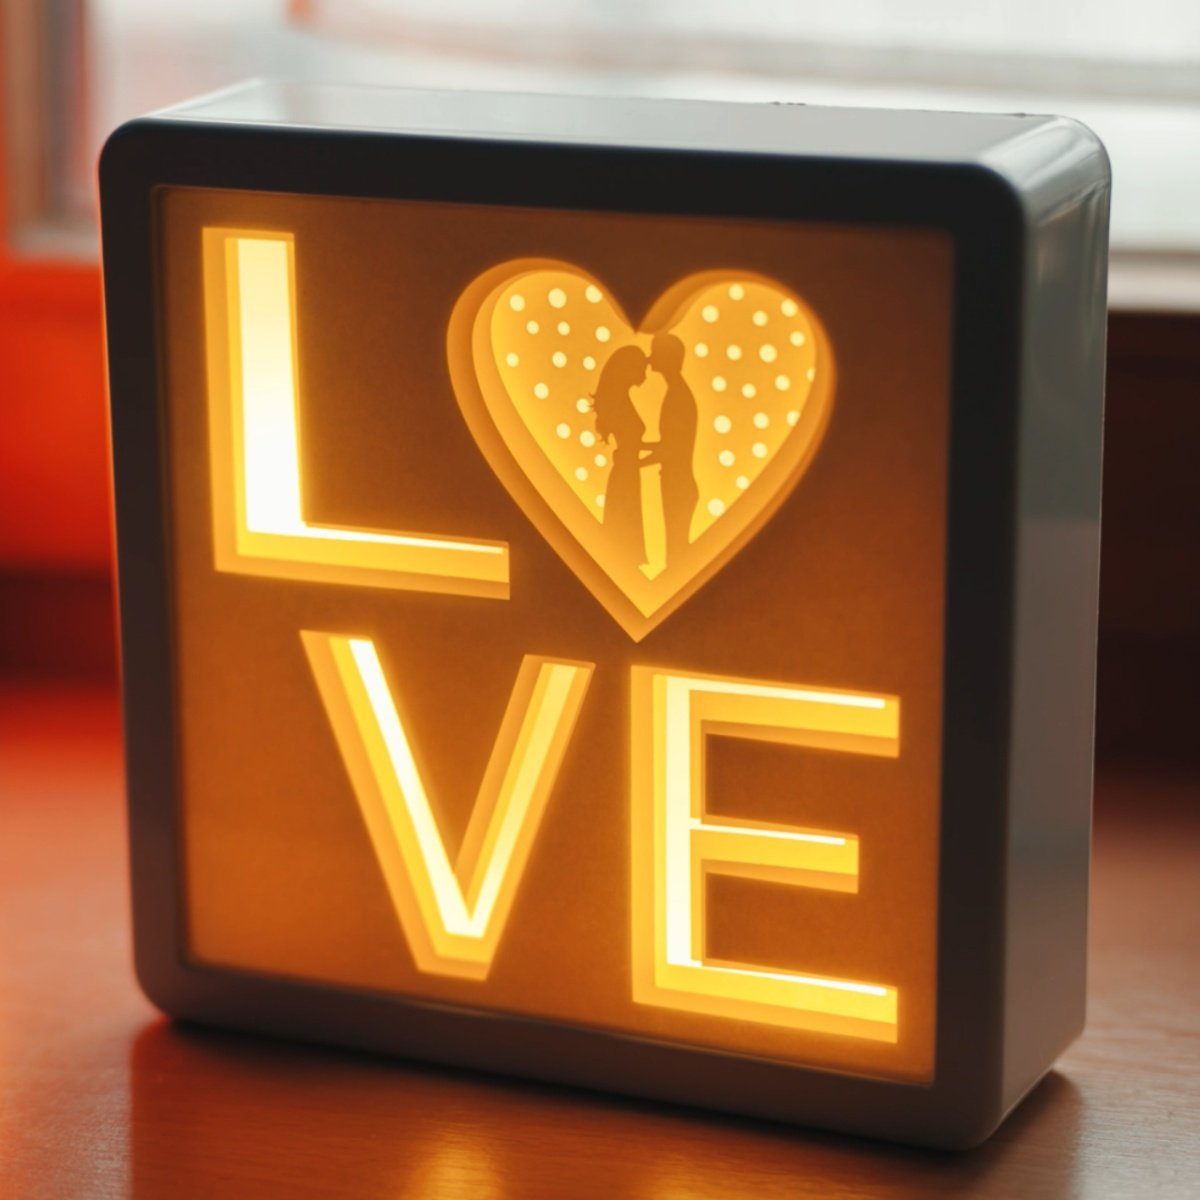 Love, LED Lichtbox kabellose Dekoration SQUARE integriert, LED - Warmweiß, fest 3D 16x5x16cm, Wohnaccessoire, Shadowbox, Papercut CiM Nachtlicht,